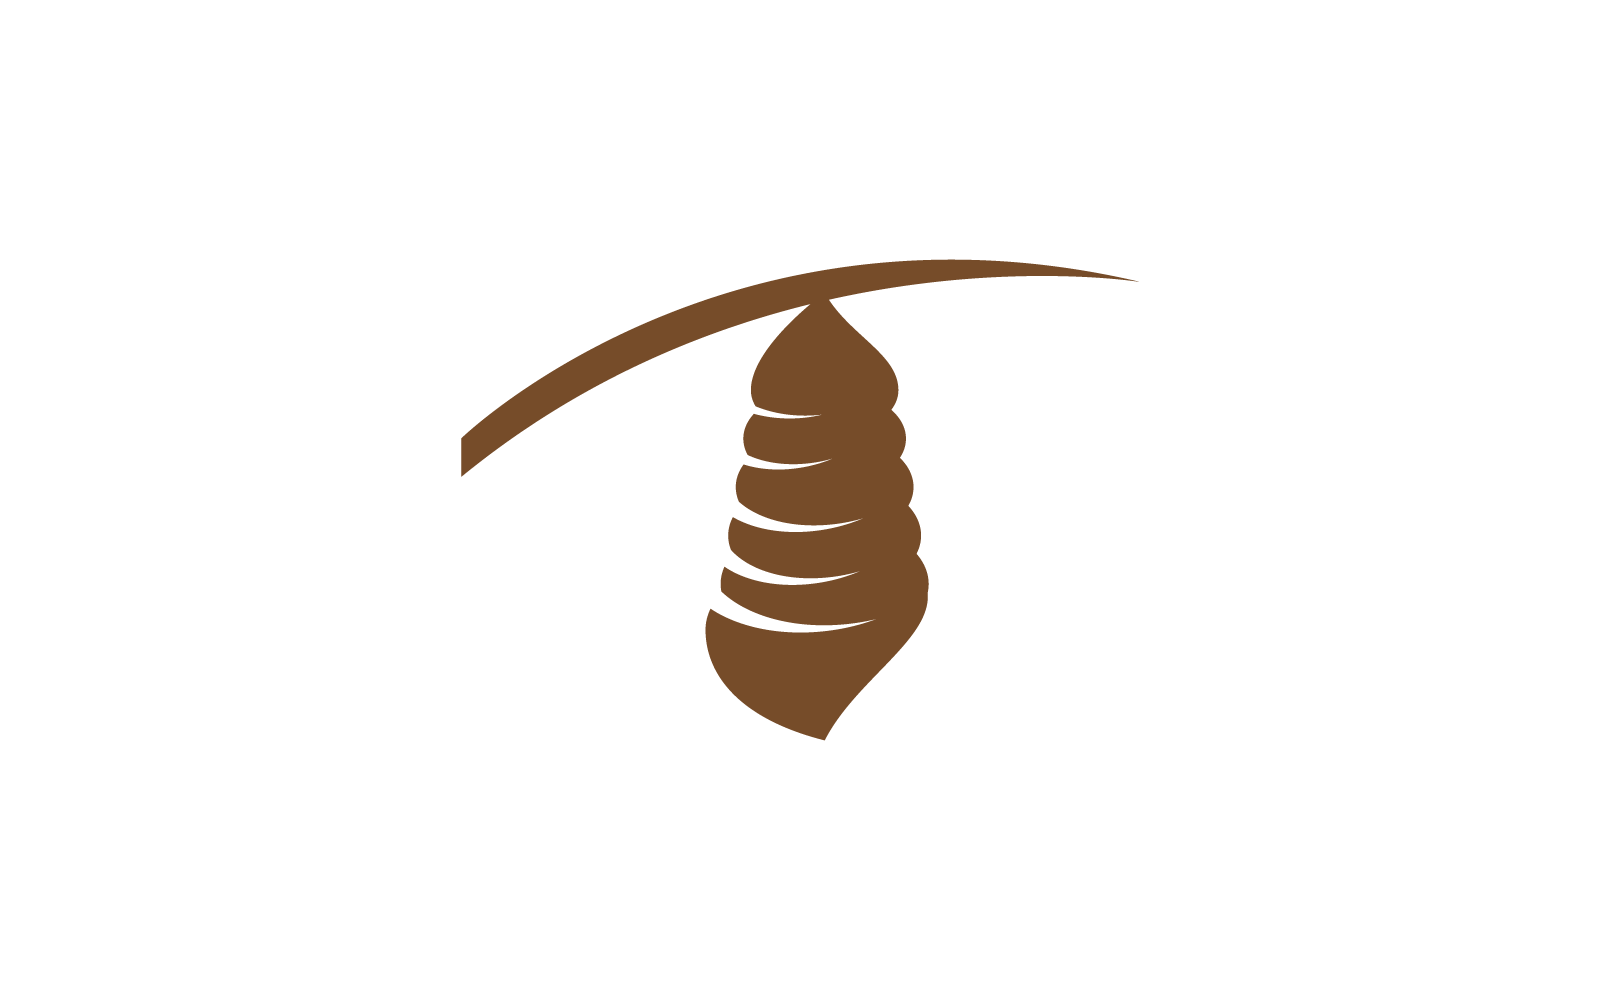 Brown Cocoon illustration logo icon vector design